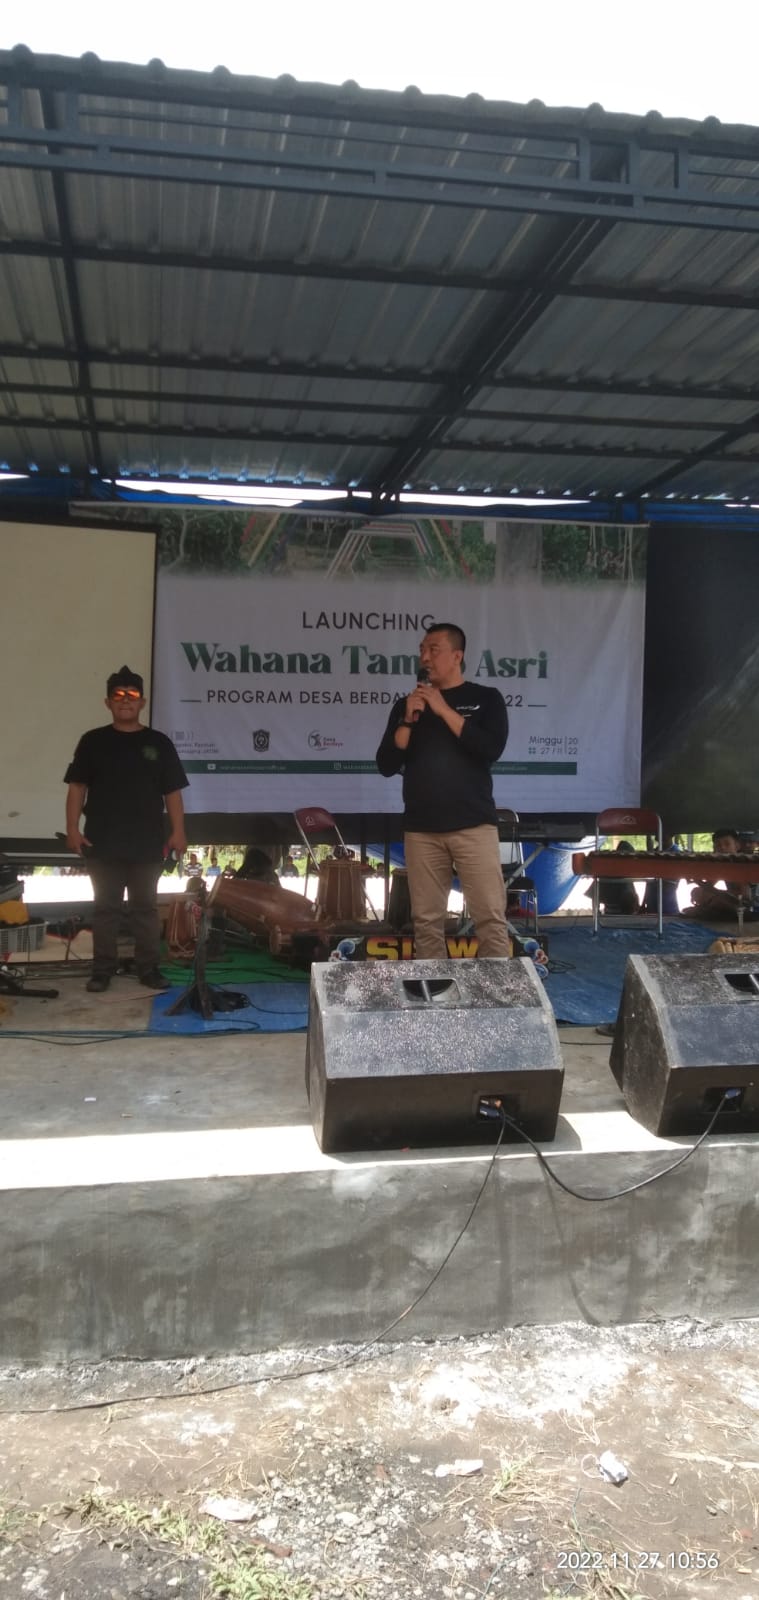 Acara Launching Wahana Tambo Asri Program Desa Berdaya BKK Provinsi Tahun 2022